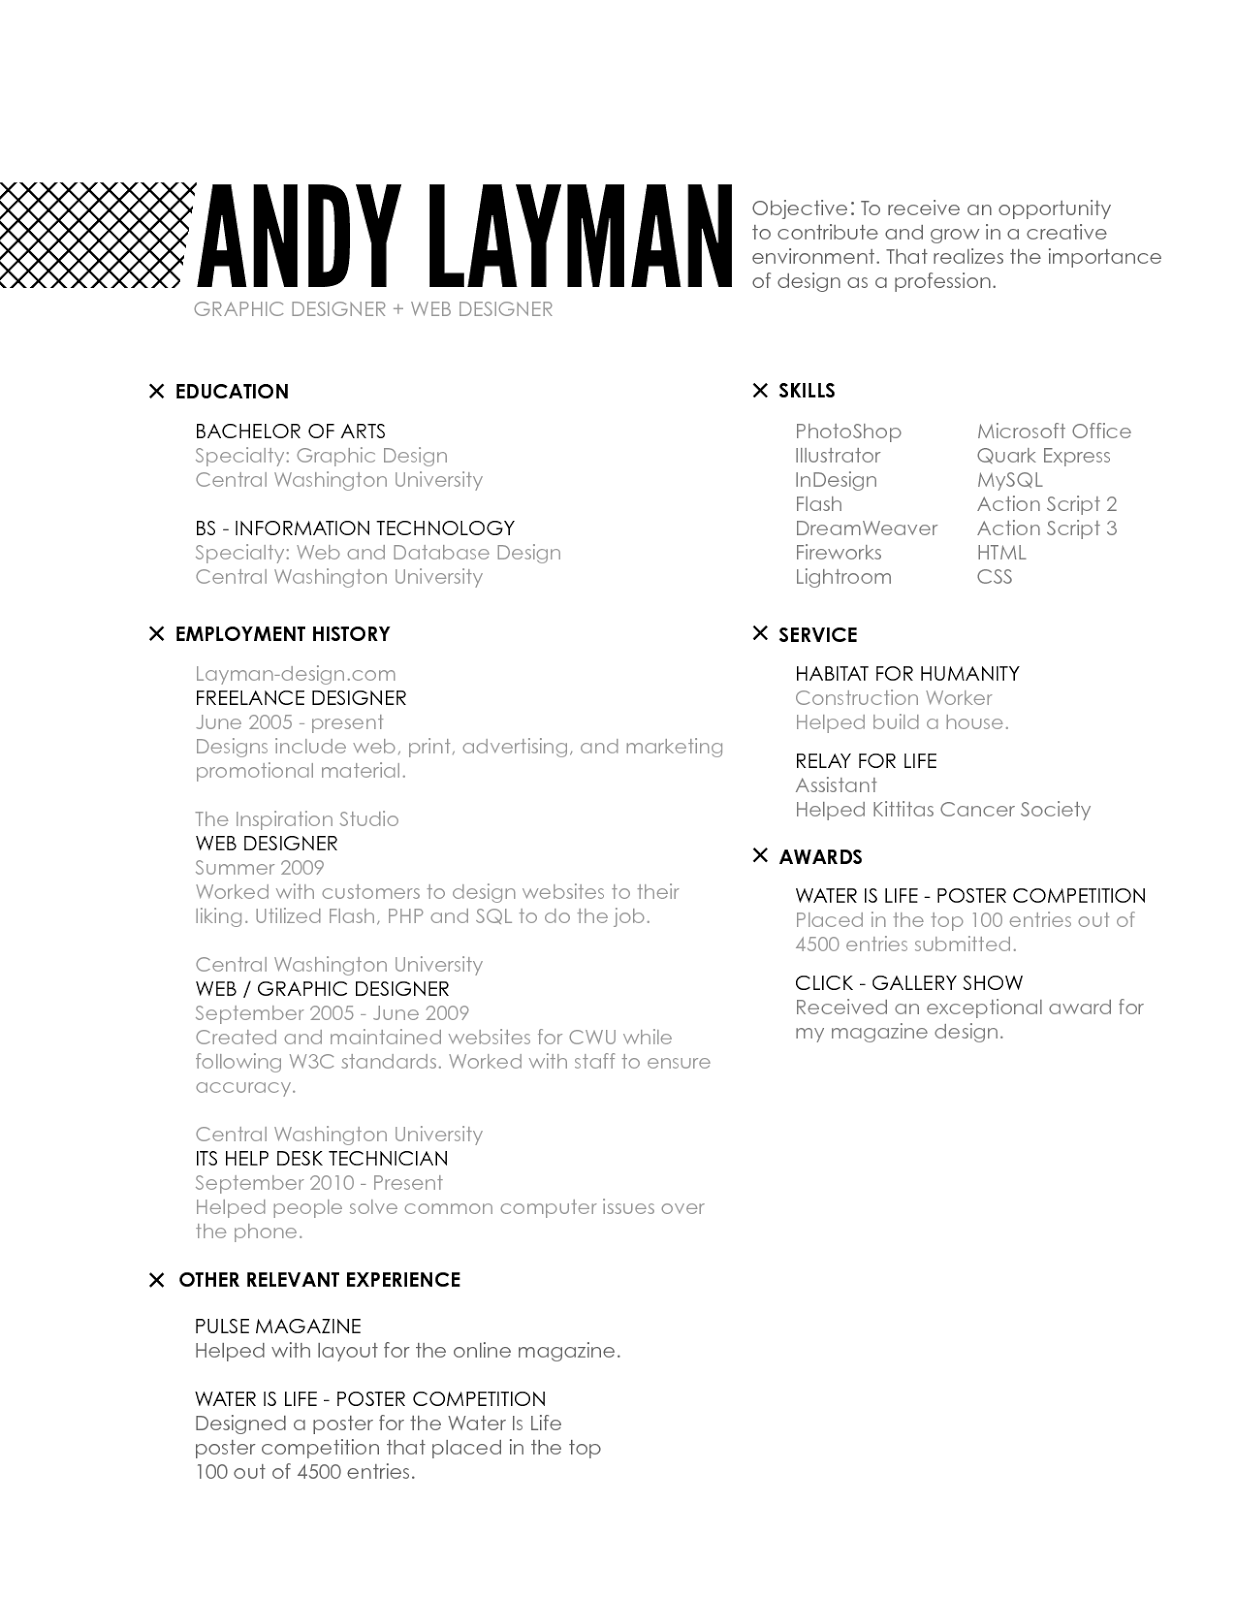 Web page design resume